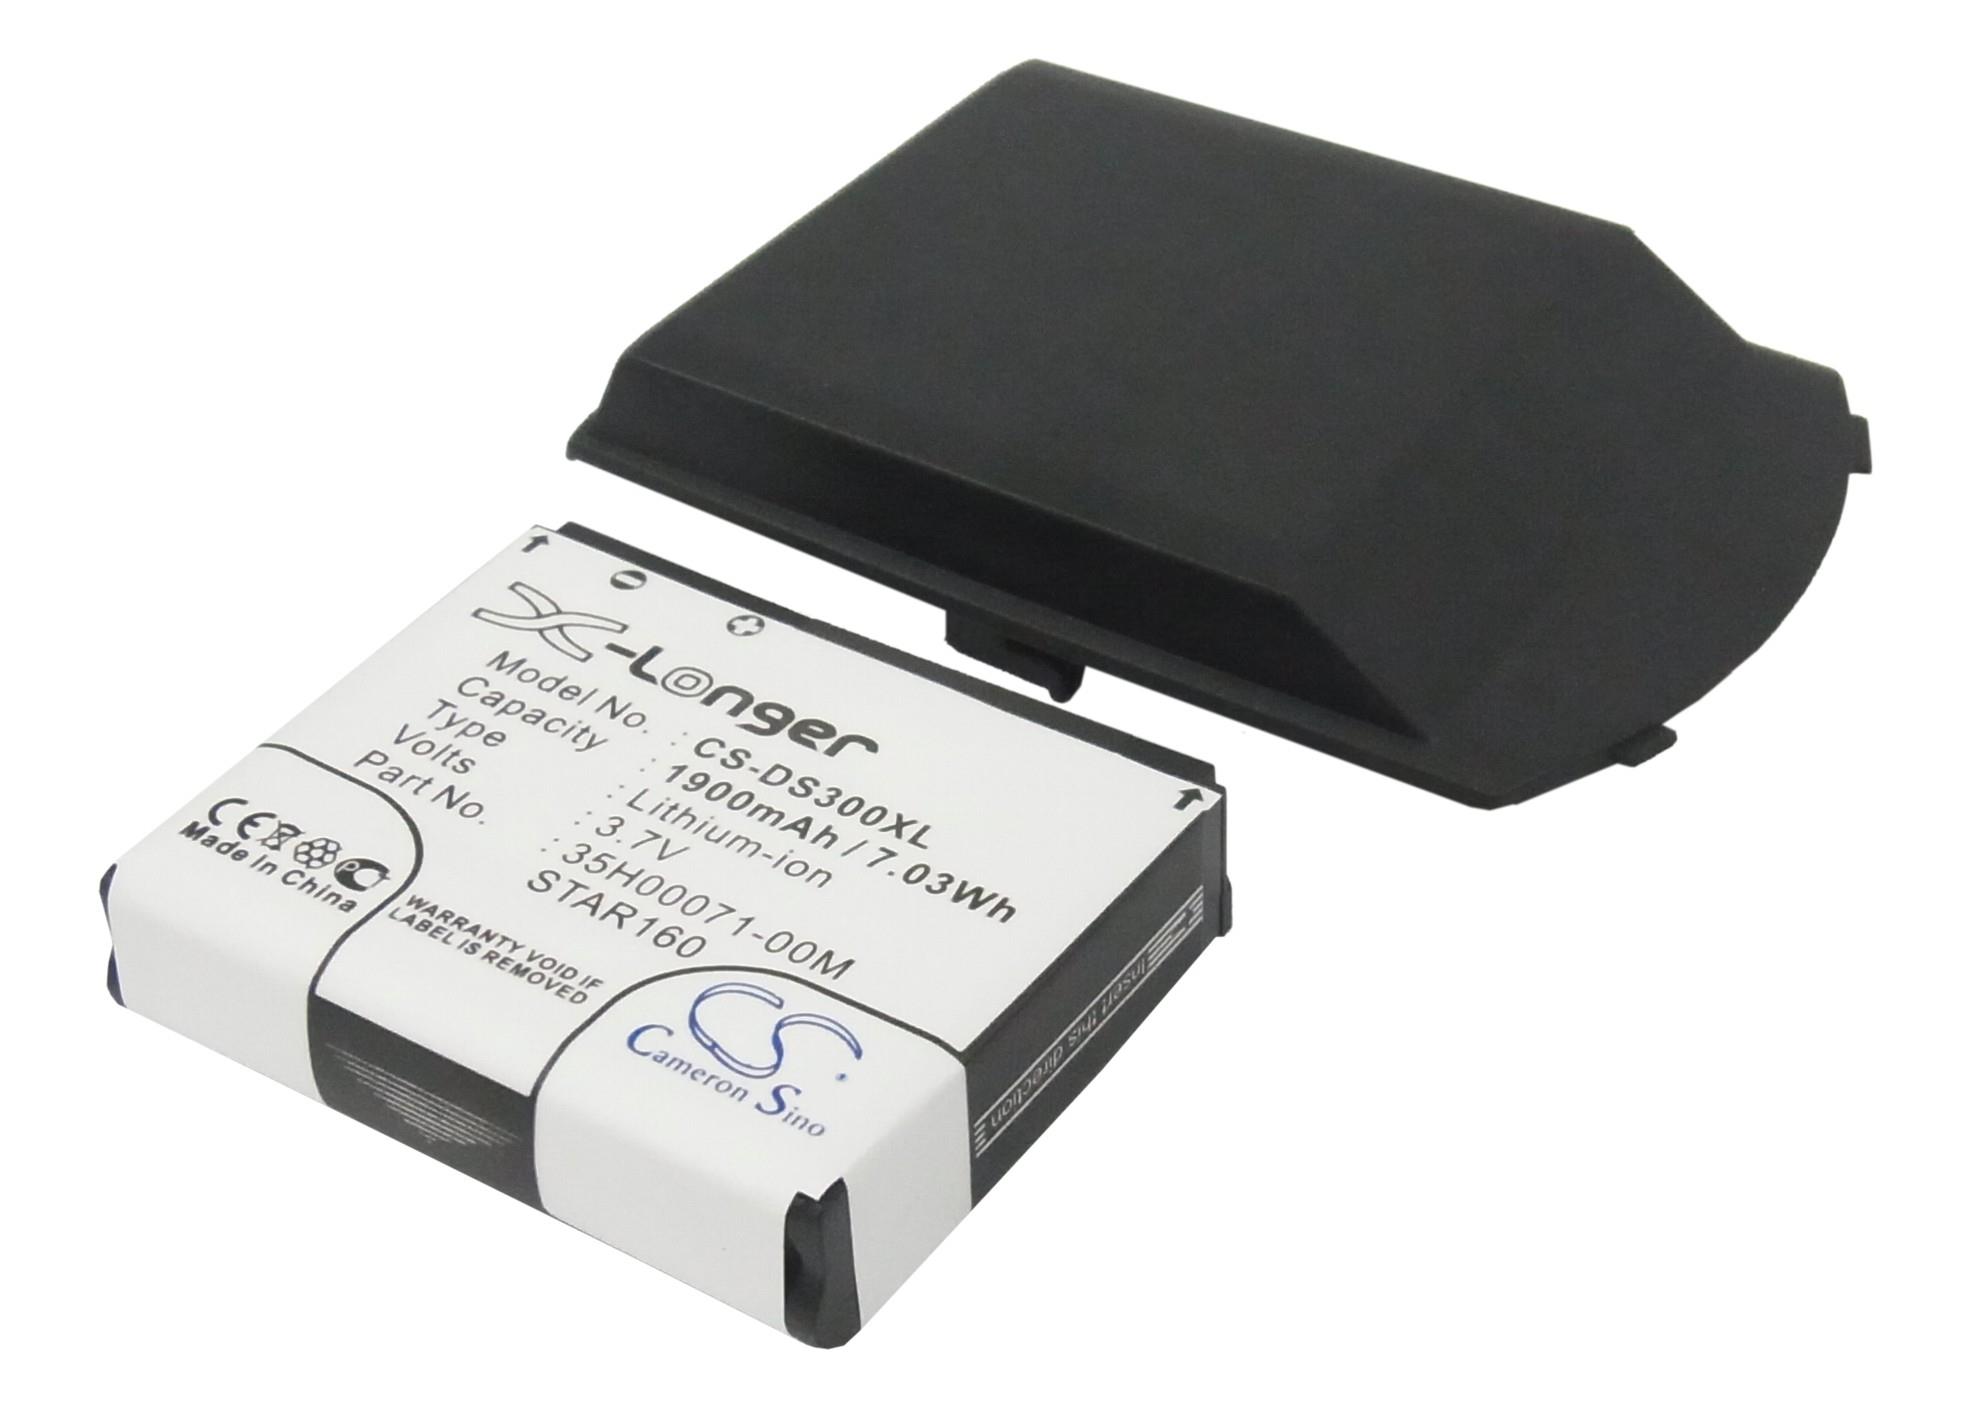 vintrons Replacement Battery For CINGULAR 3125,|||DOPOD,710,S300,|||HTC,Star trek,Star trek 100